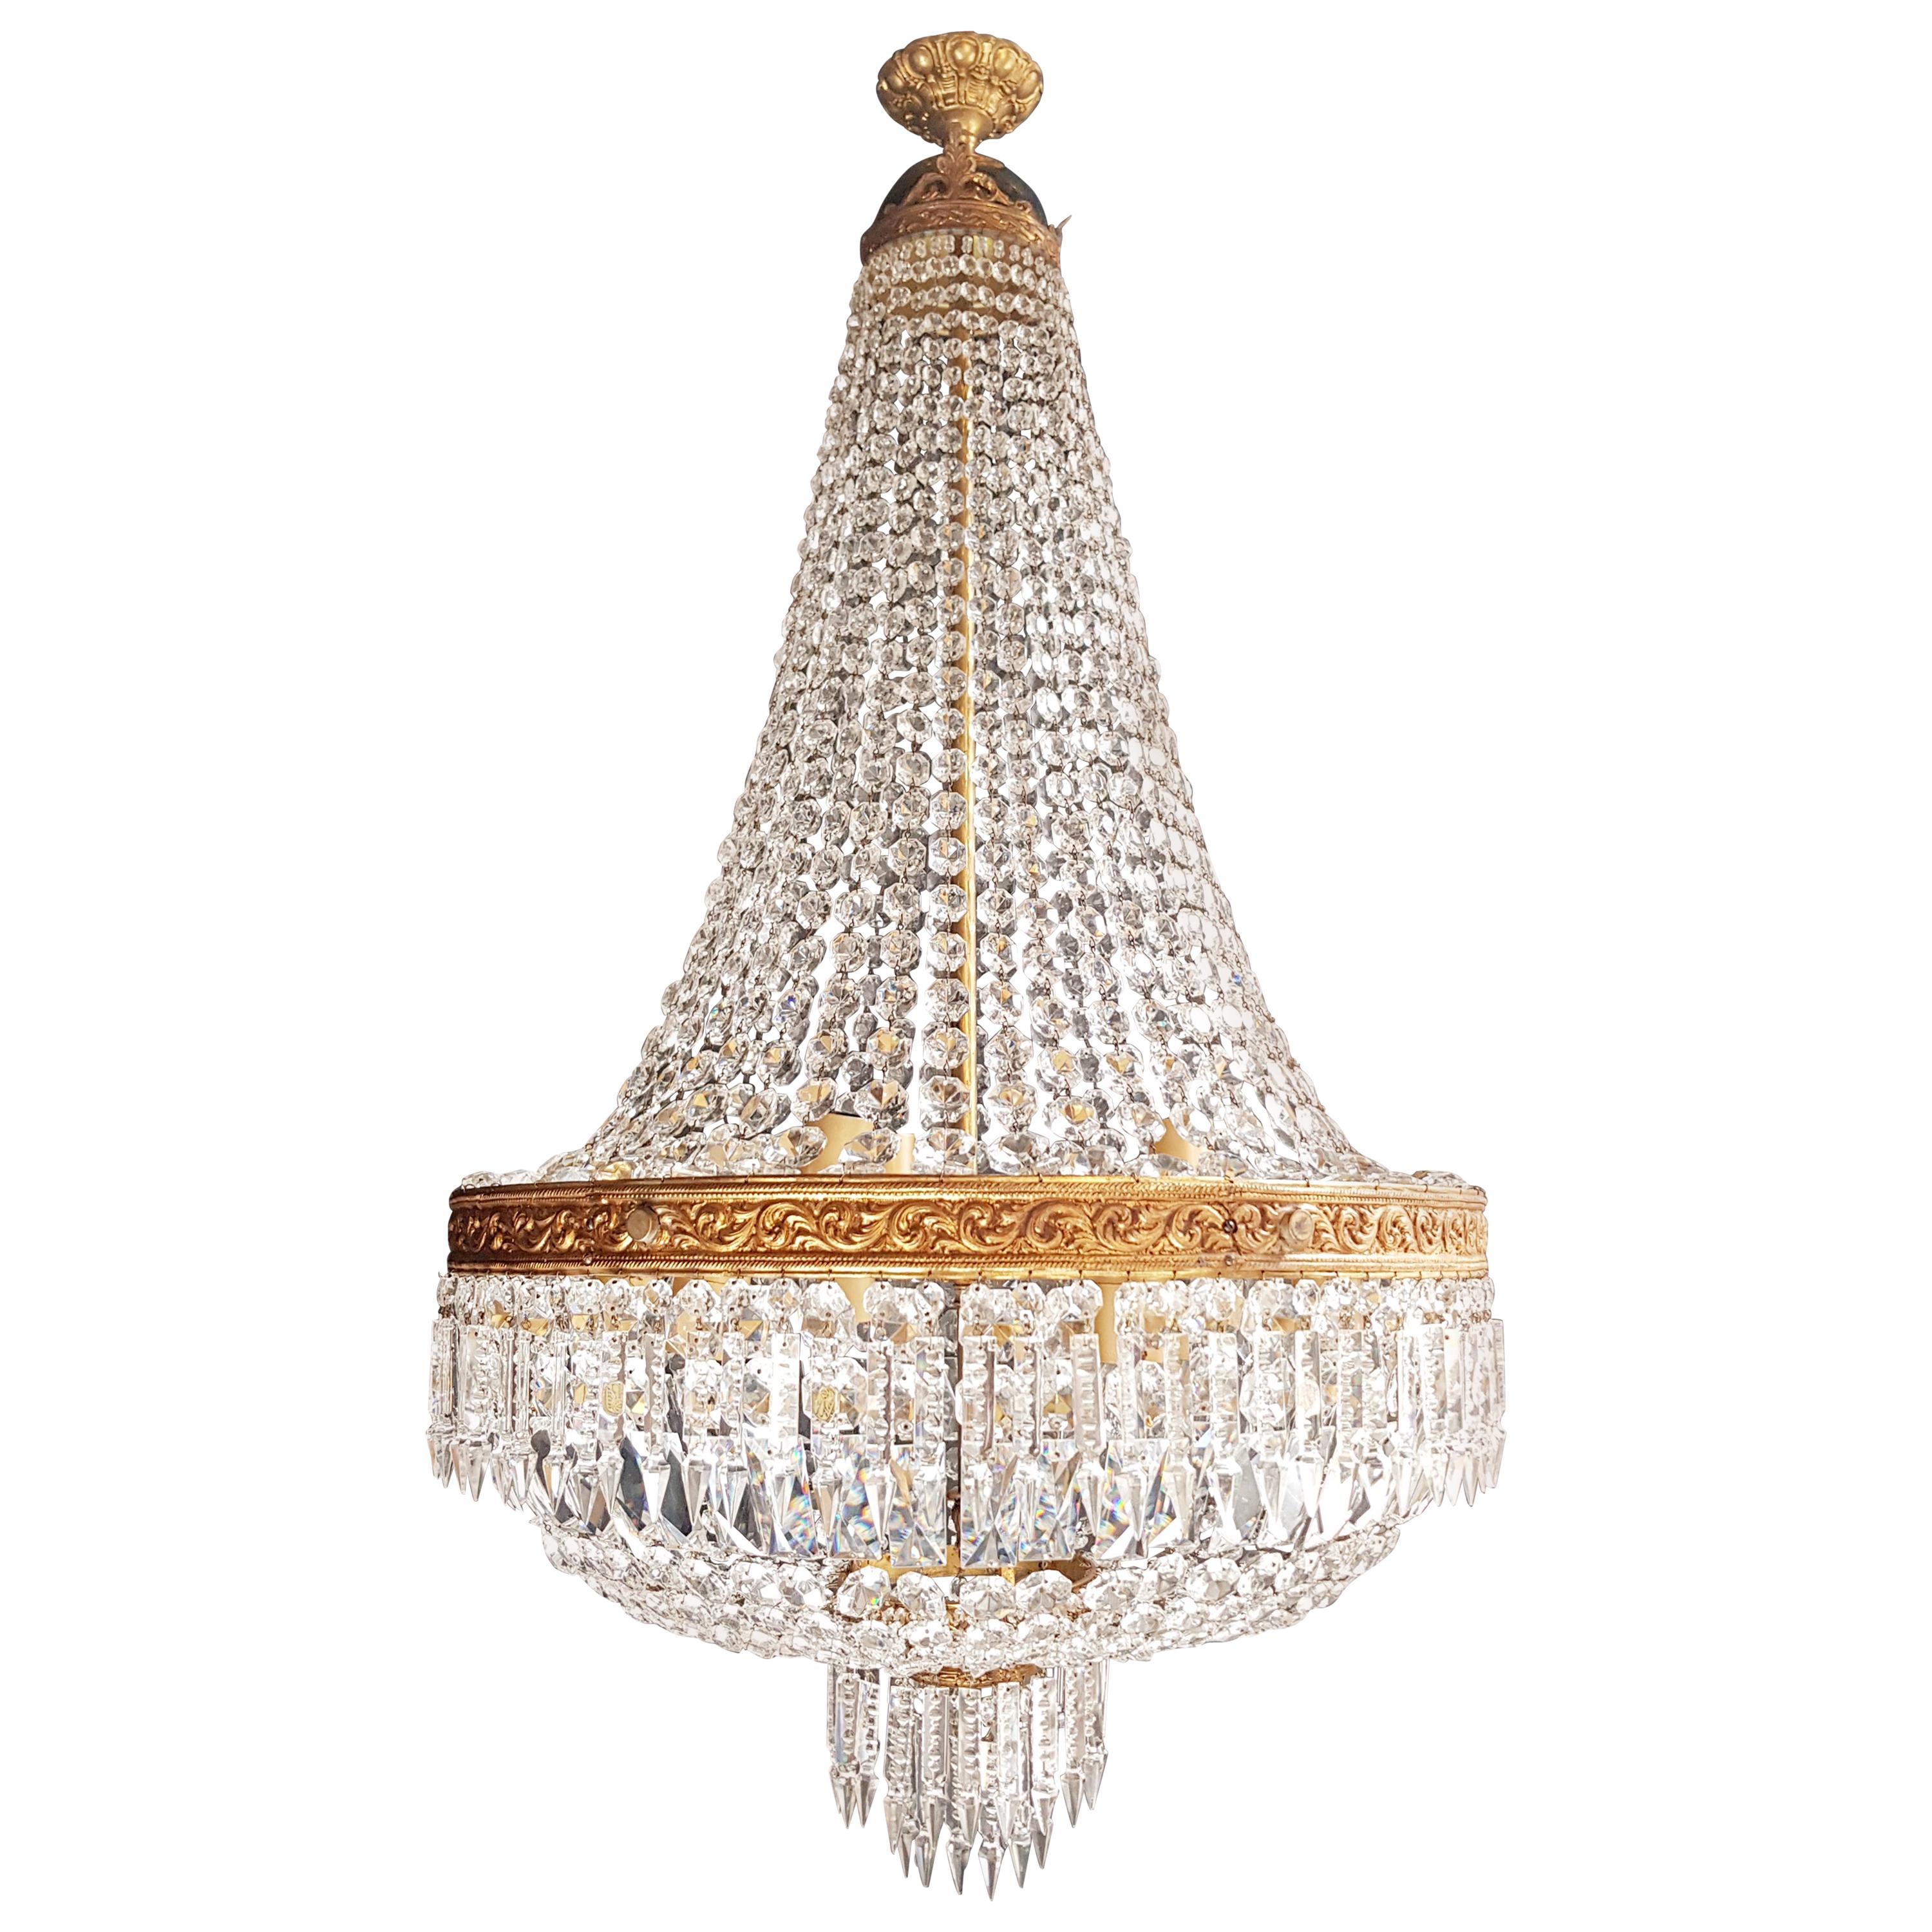 Montgolfiè Empire Brass Sac a Pearl Chandelier Crystal Lustre Ceiling Antique